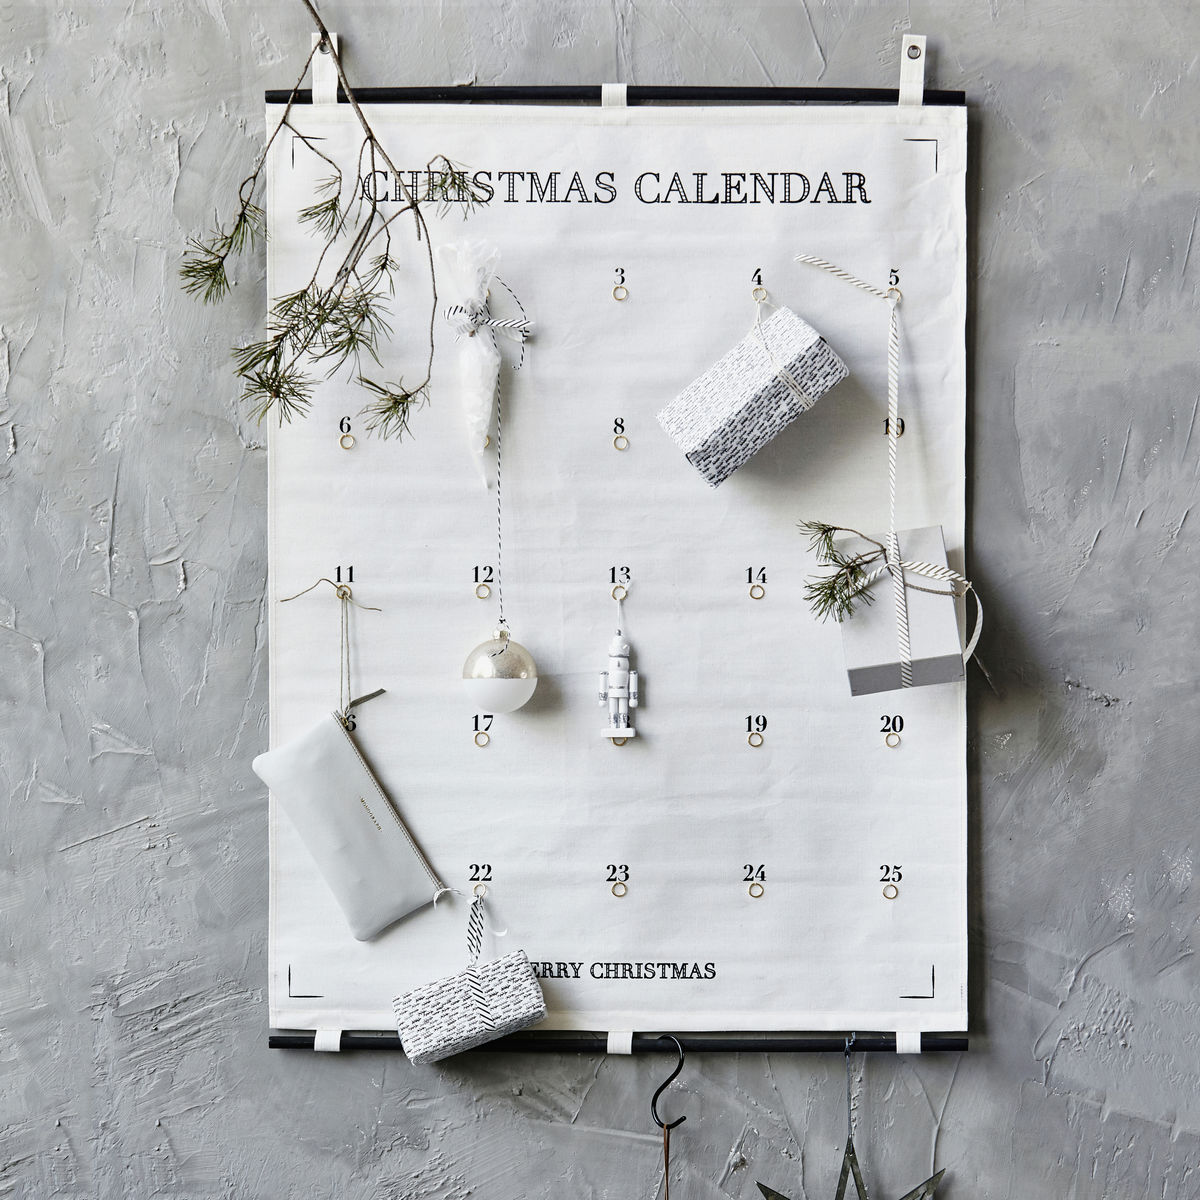 Kalender, 25 days till Christmas